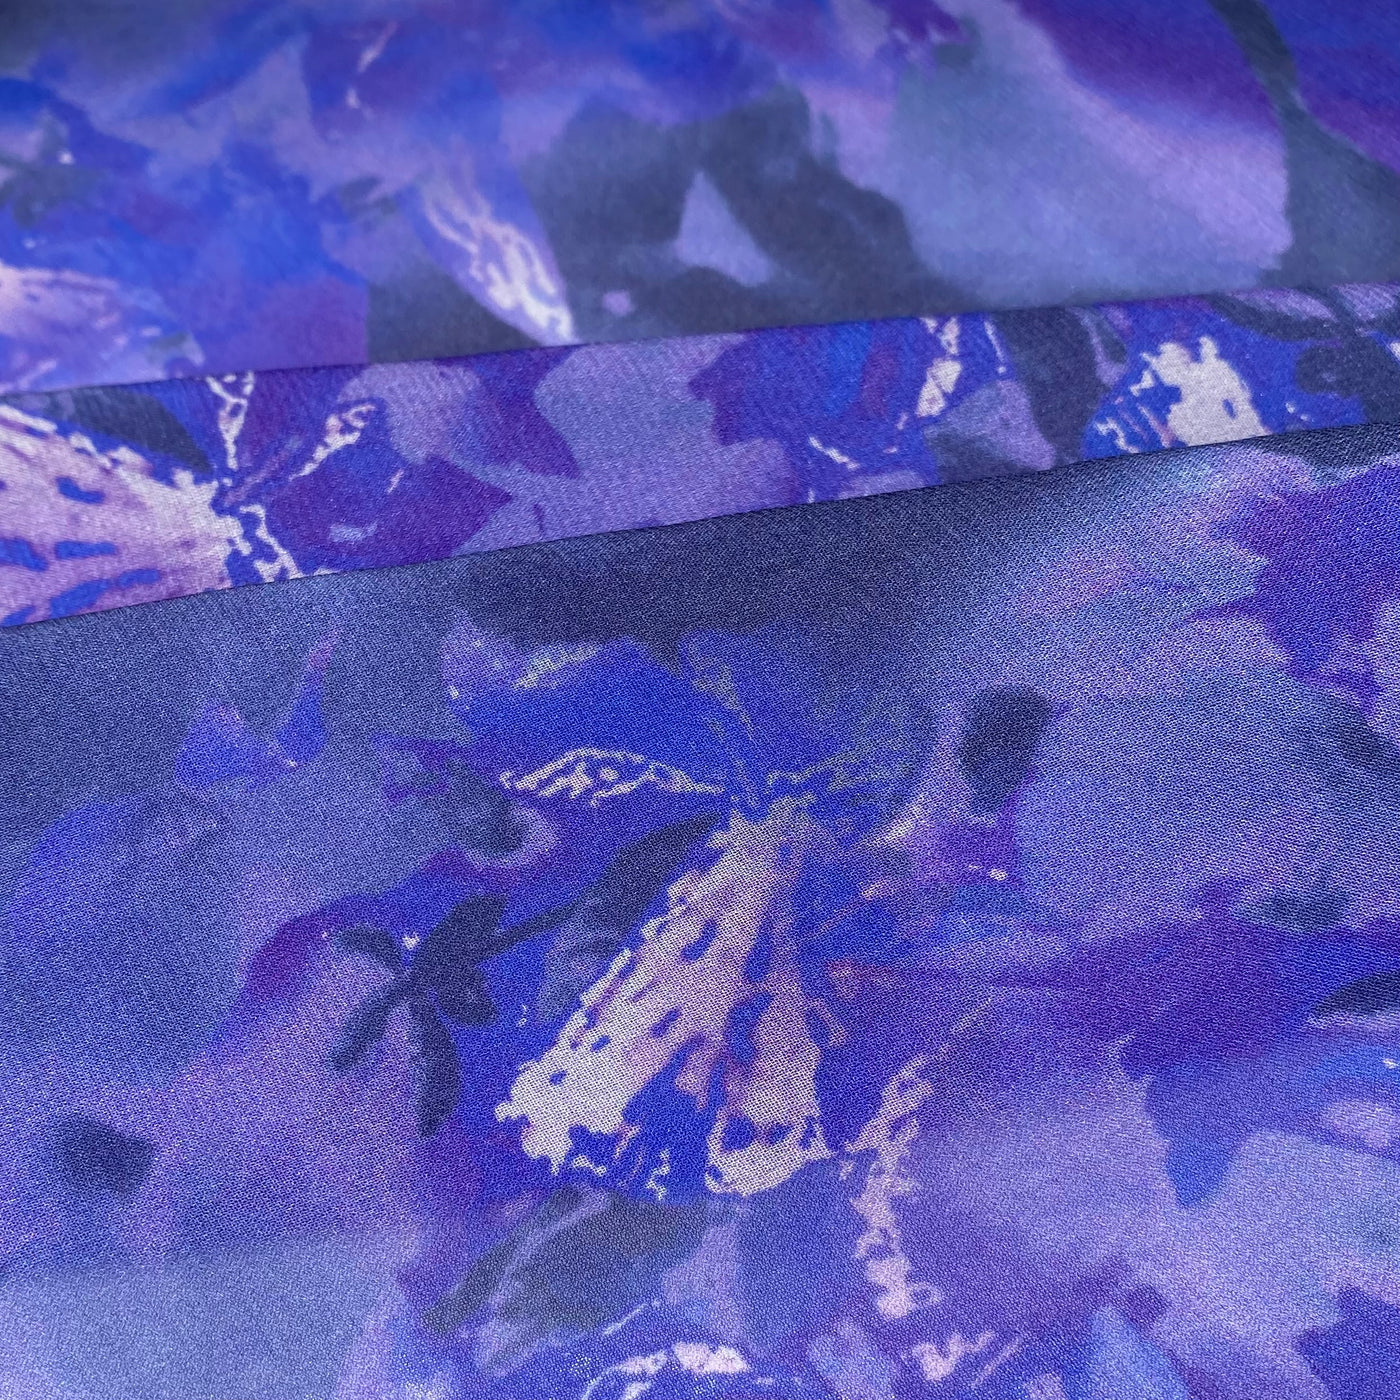 Floral Silk Chiffon - 58” - Purple